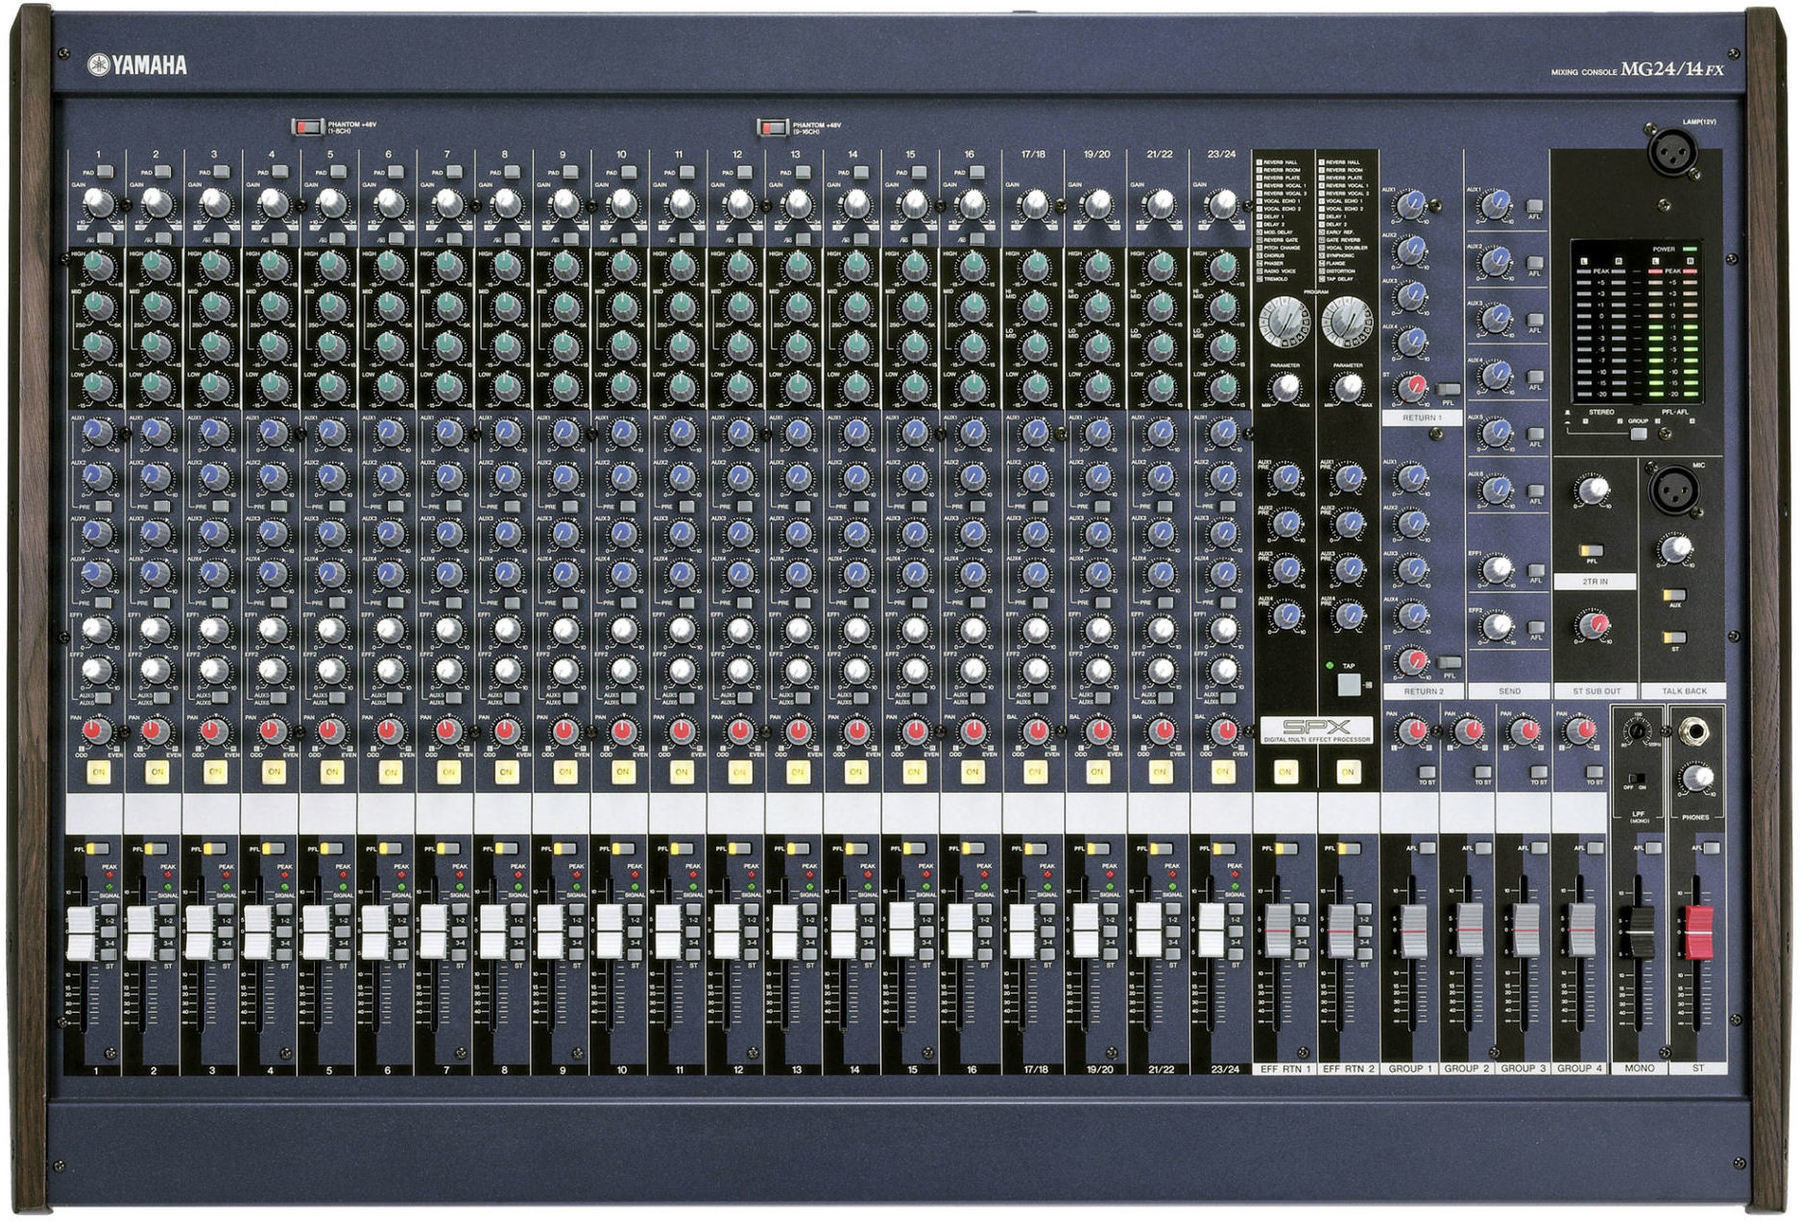 Table de mixage analogique Yamaha MG 24 14 FX